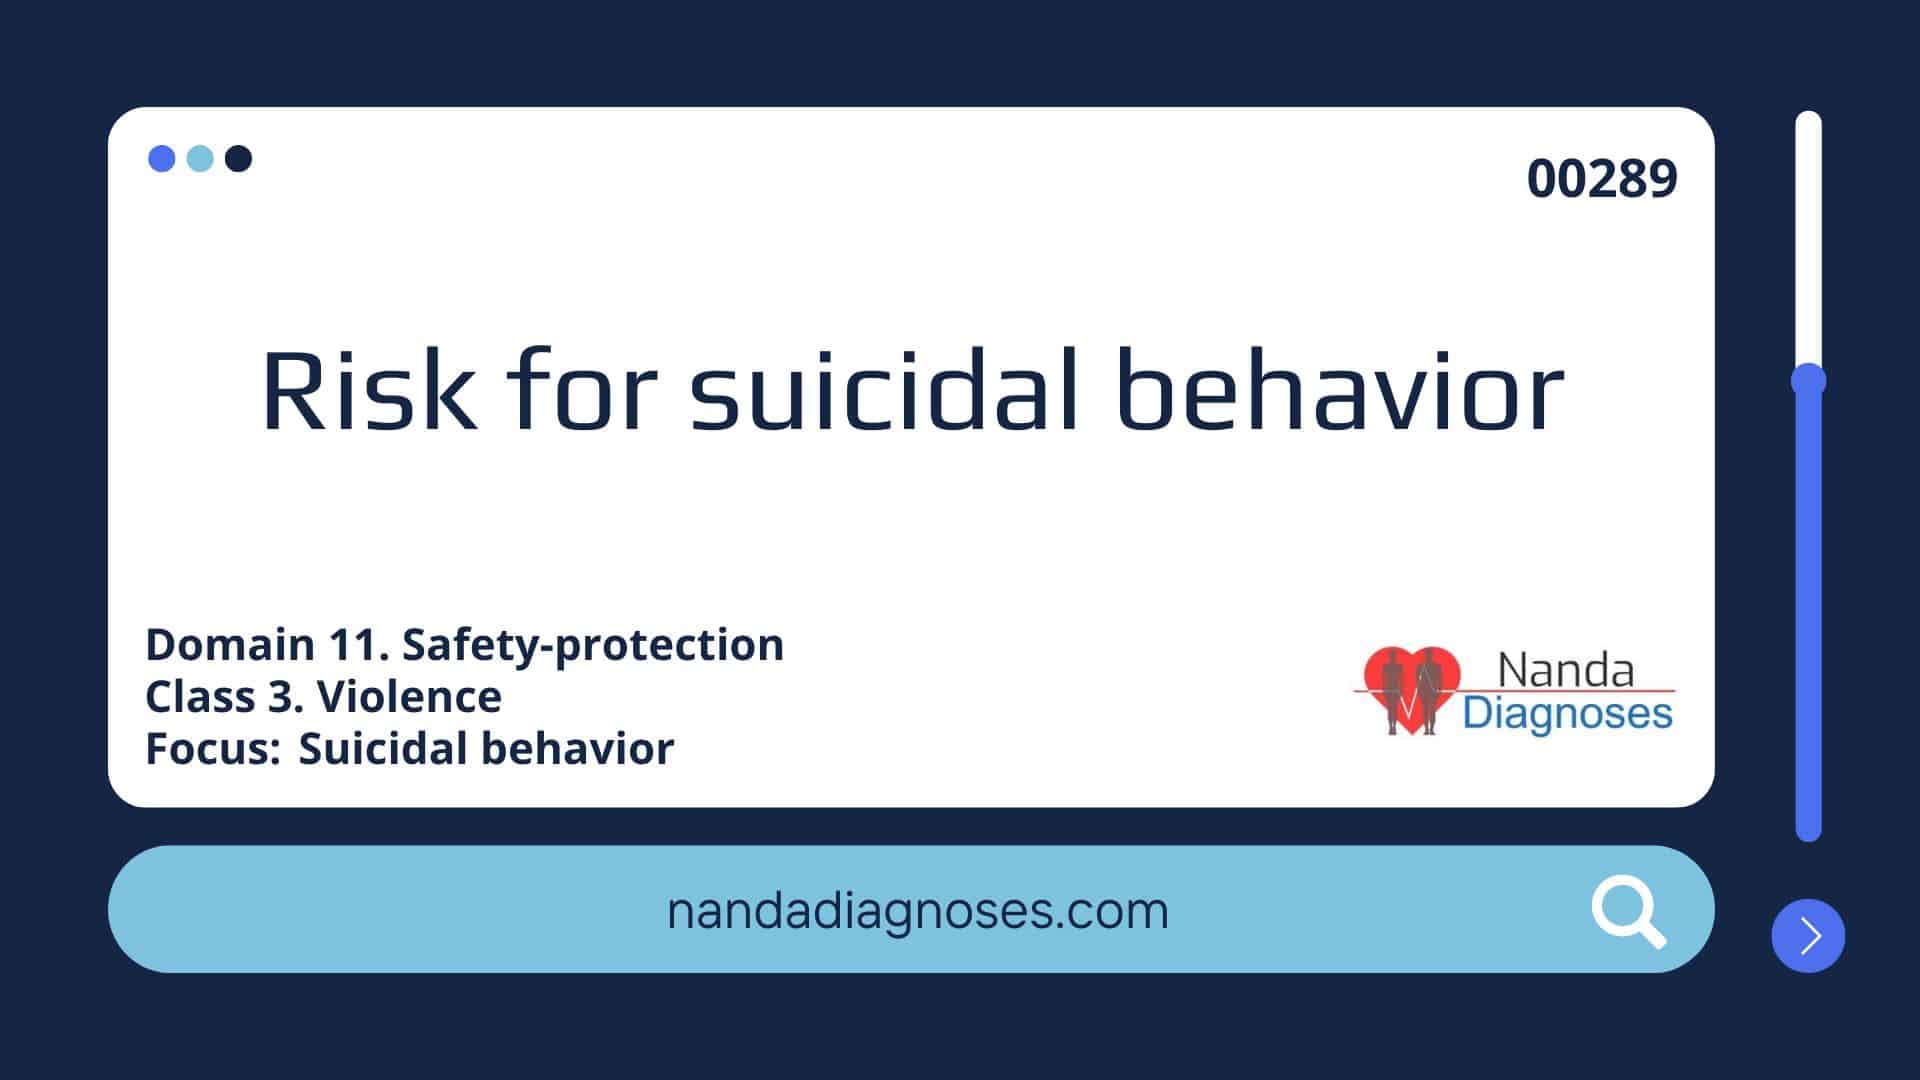 Nursing diagnosis Risk for suicidal behavior